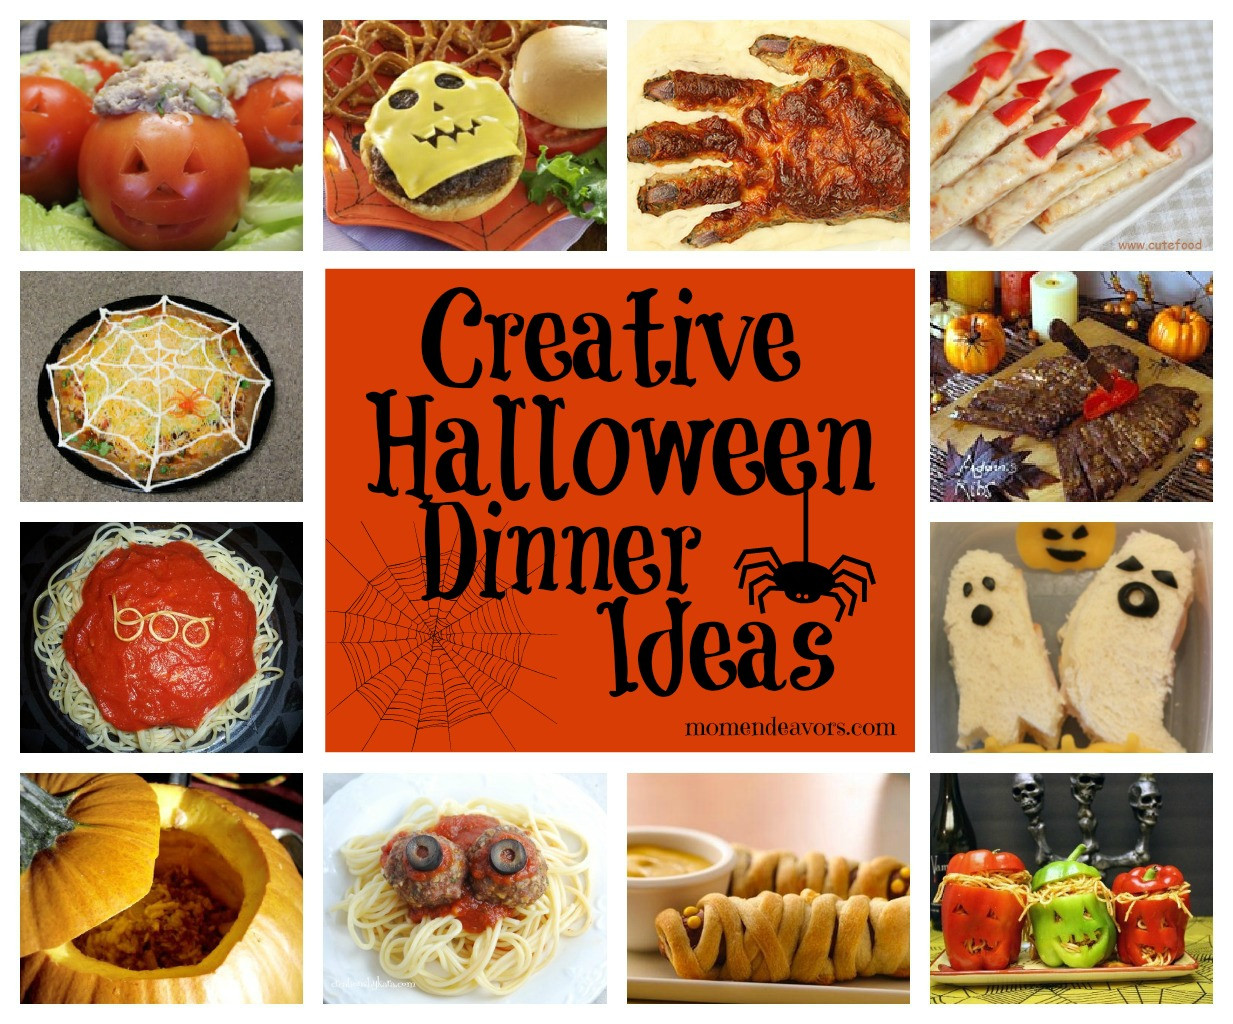 Fun Halloween Dinners
 15 Creative Halloween Dinner Ideas